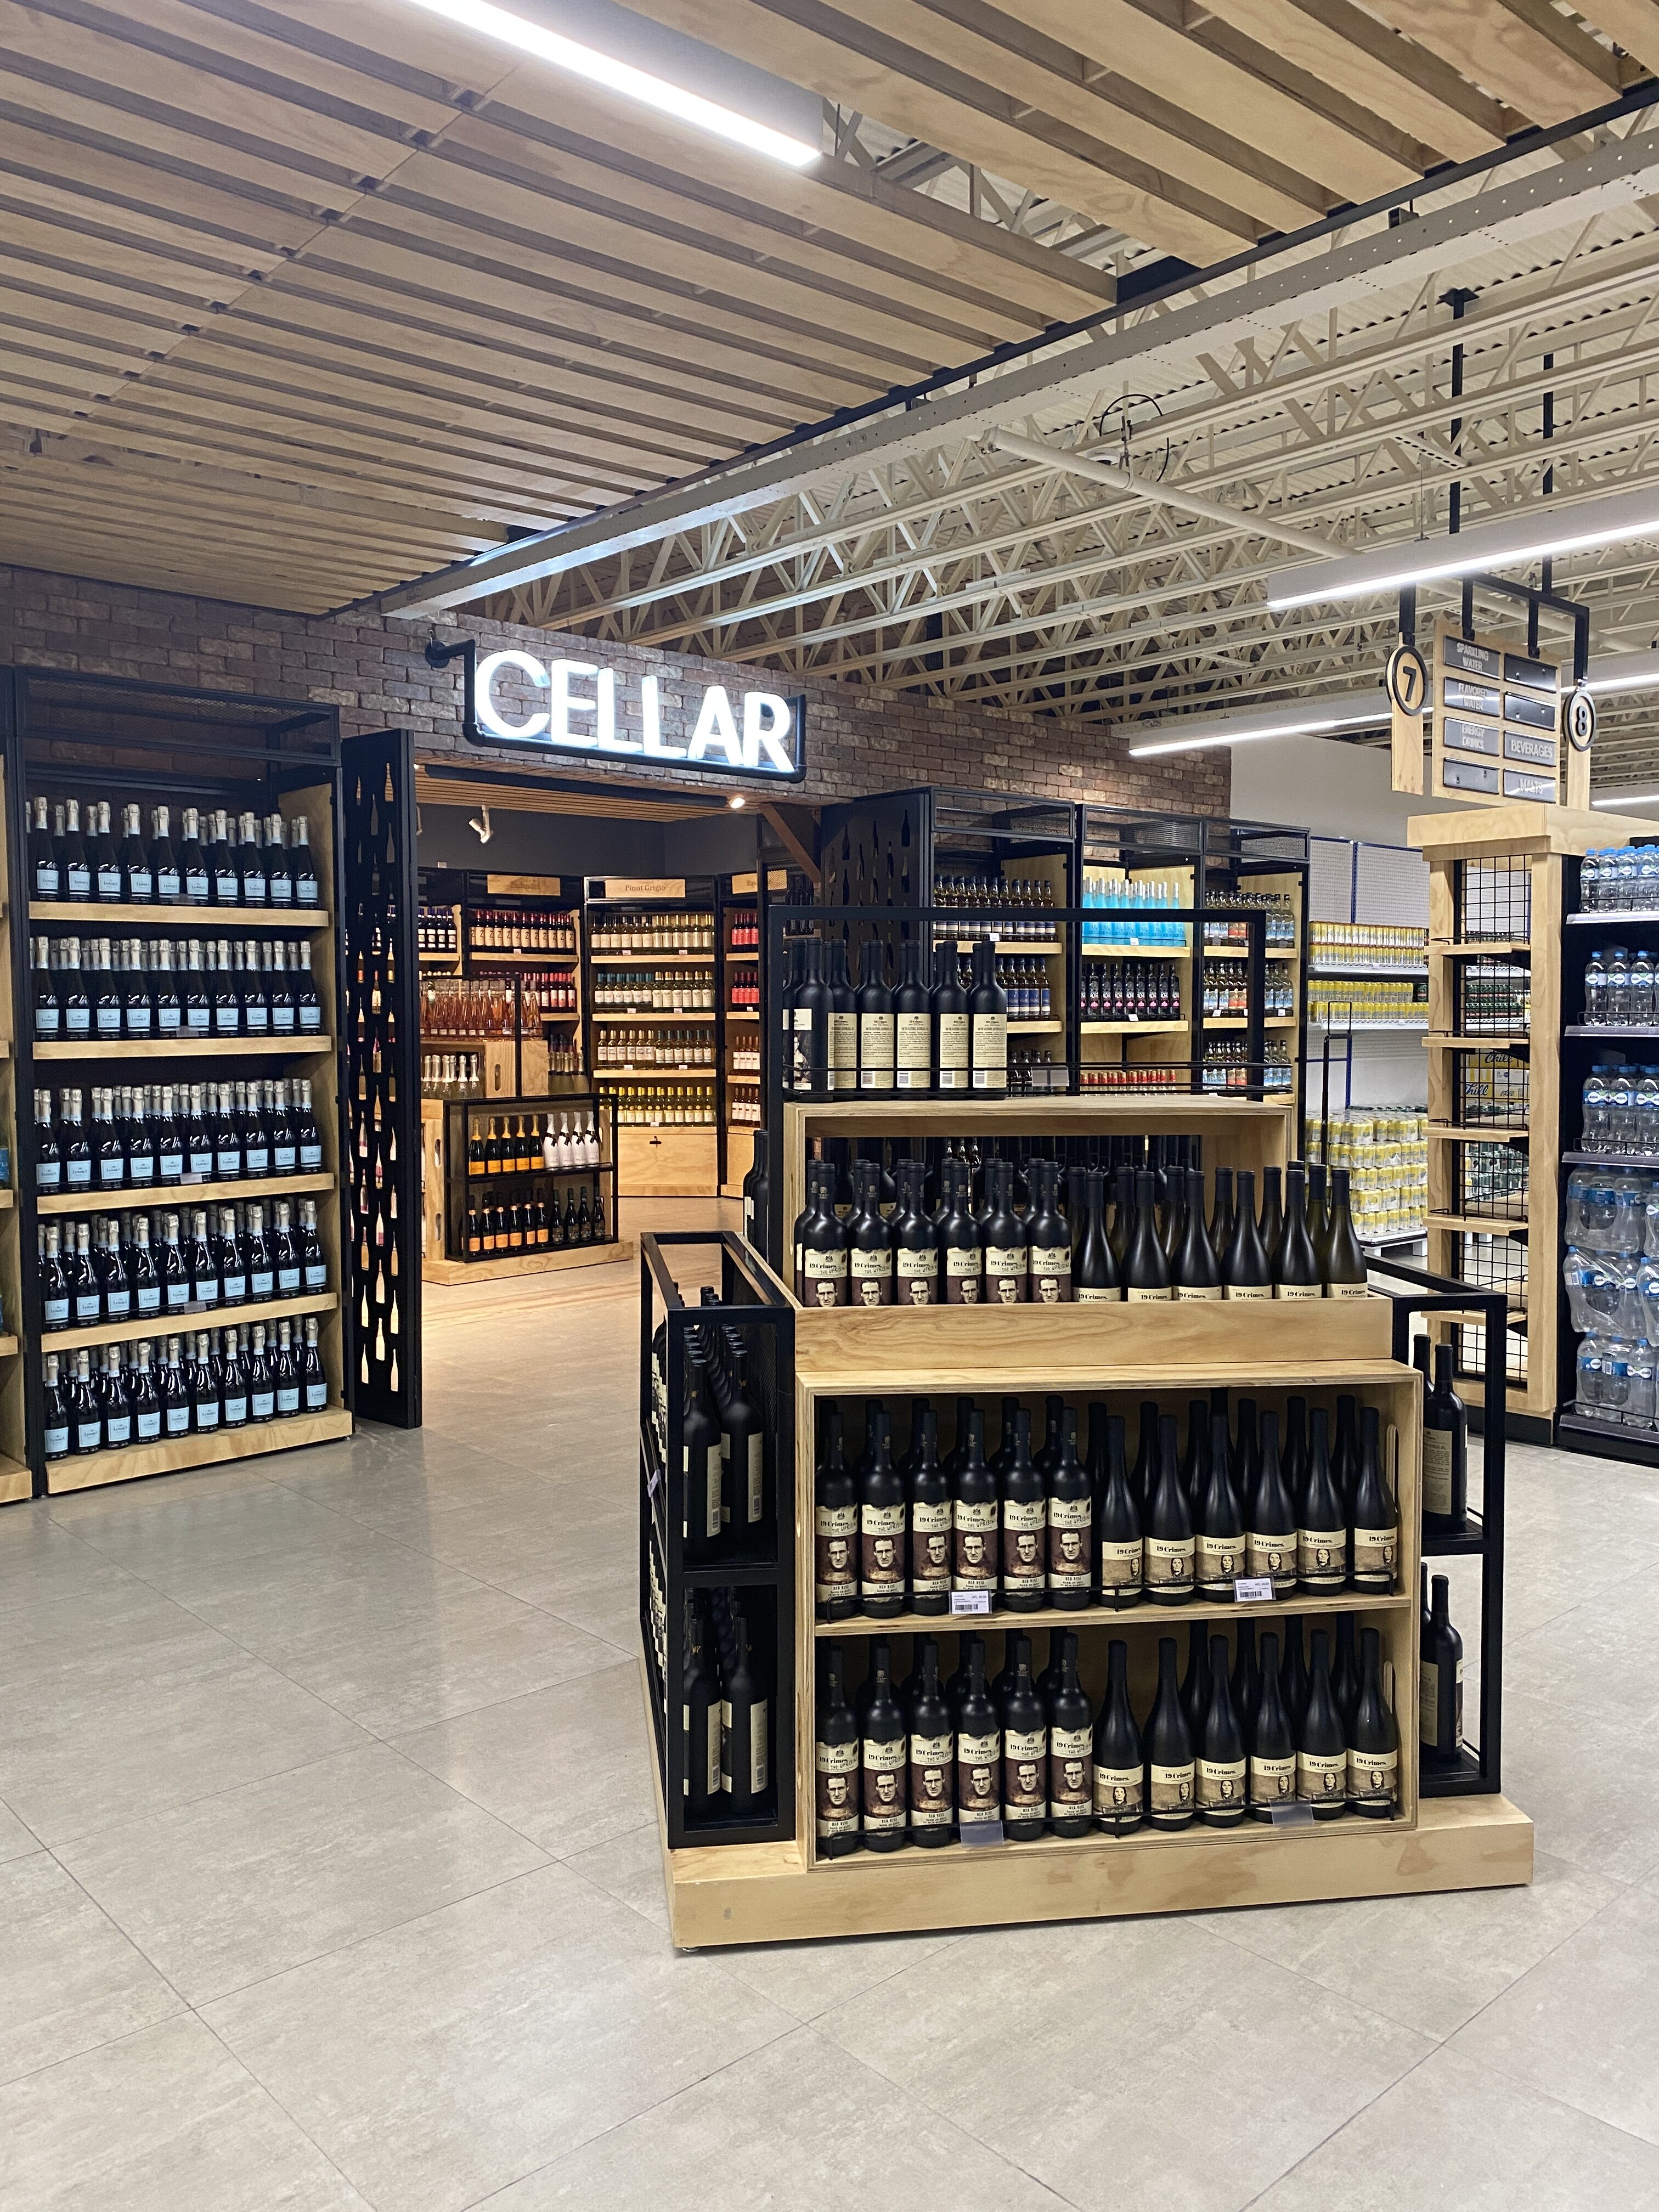 Cellar wine beer supermarket aruba Cmart